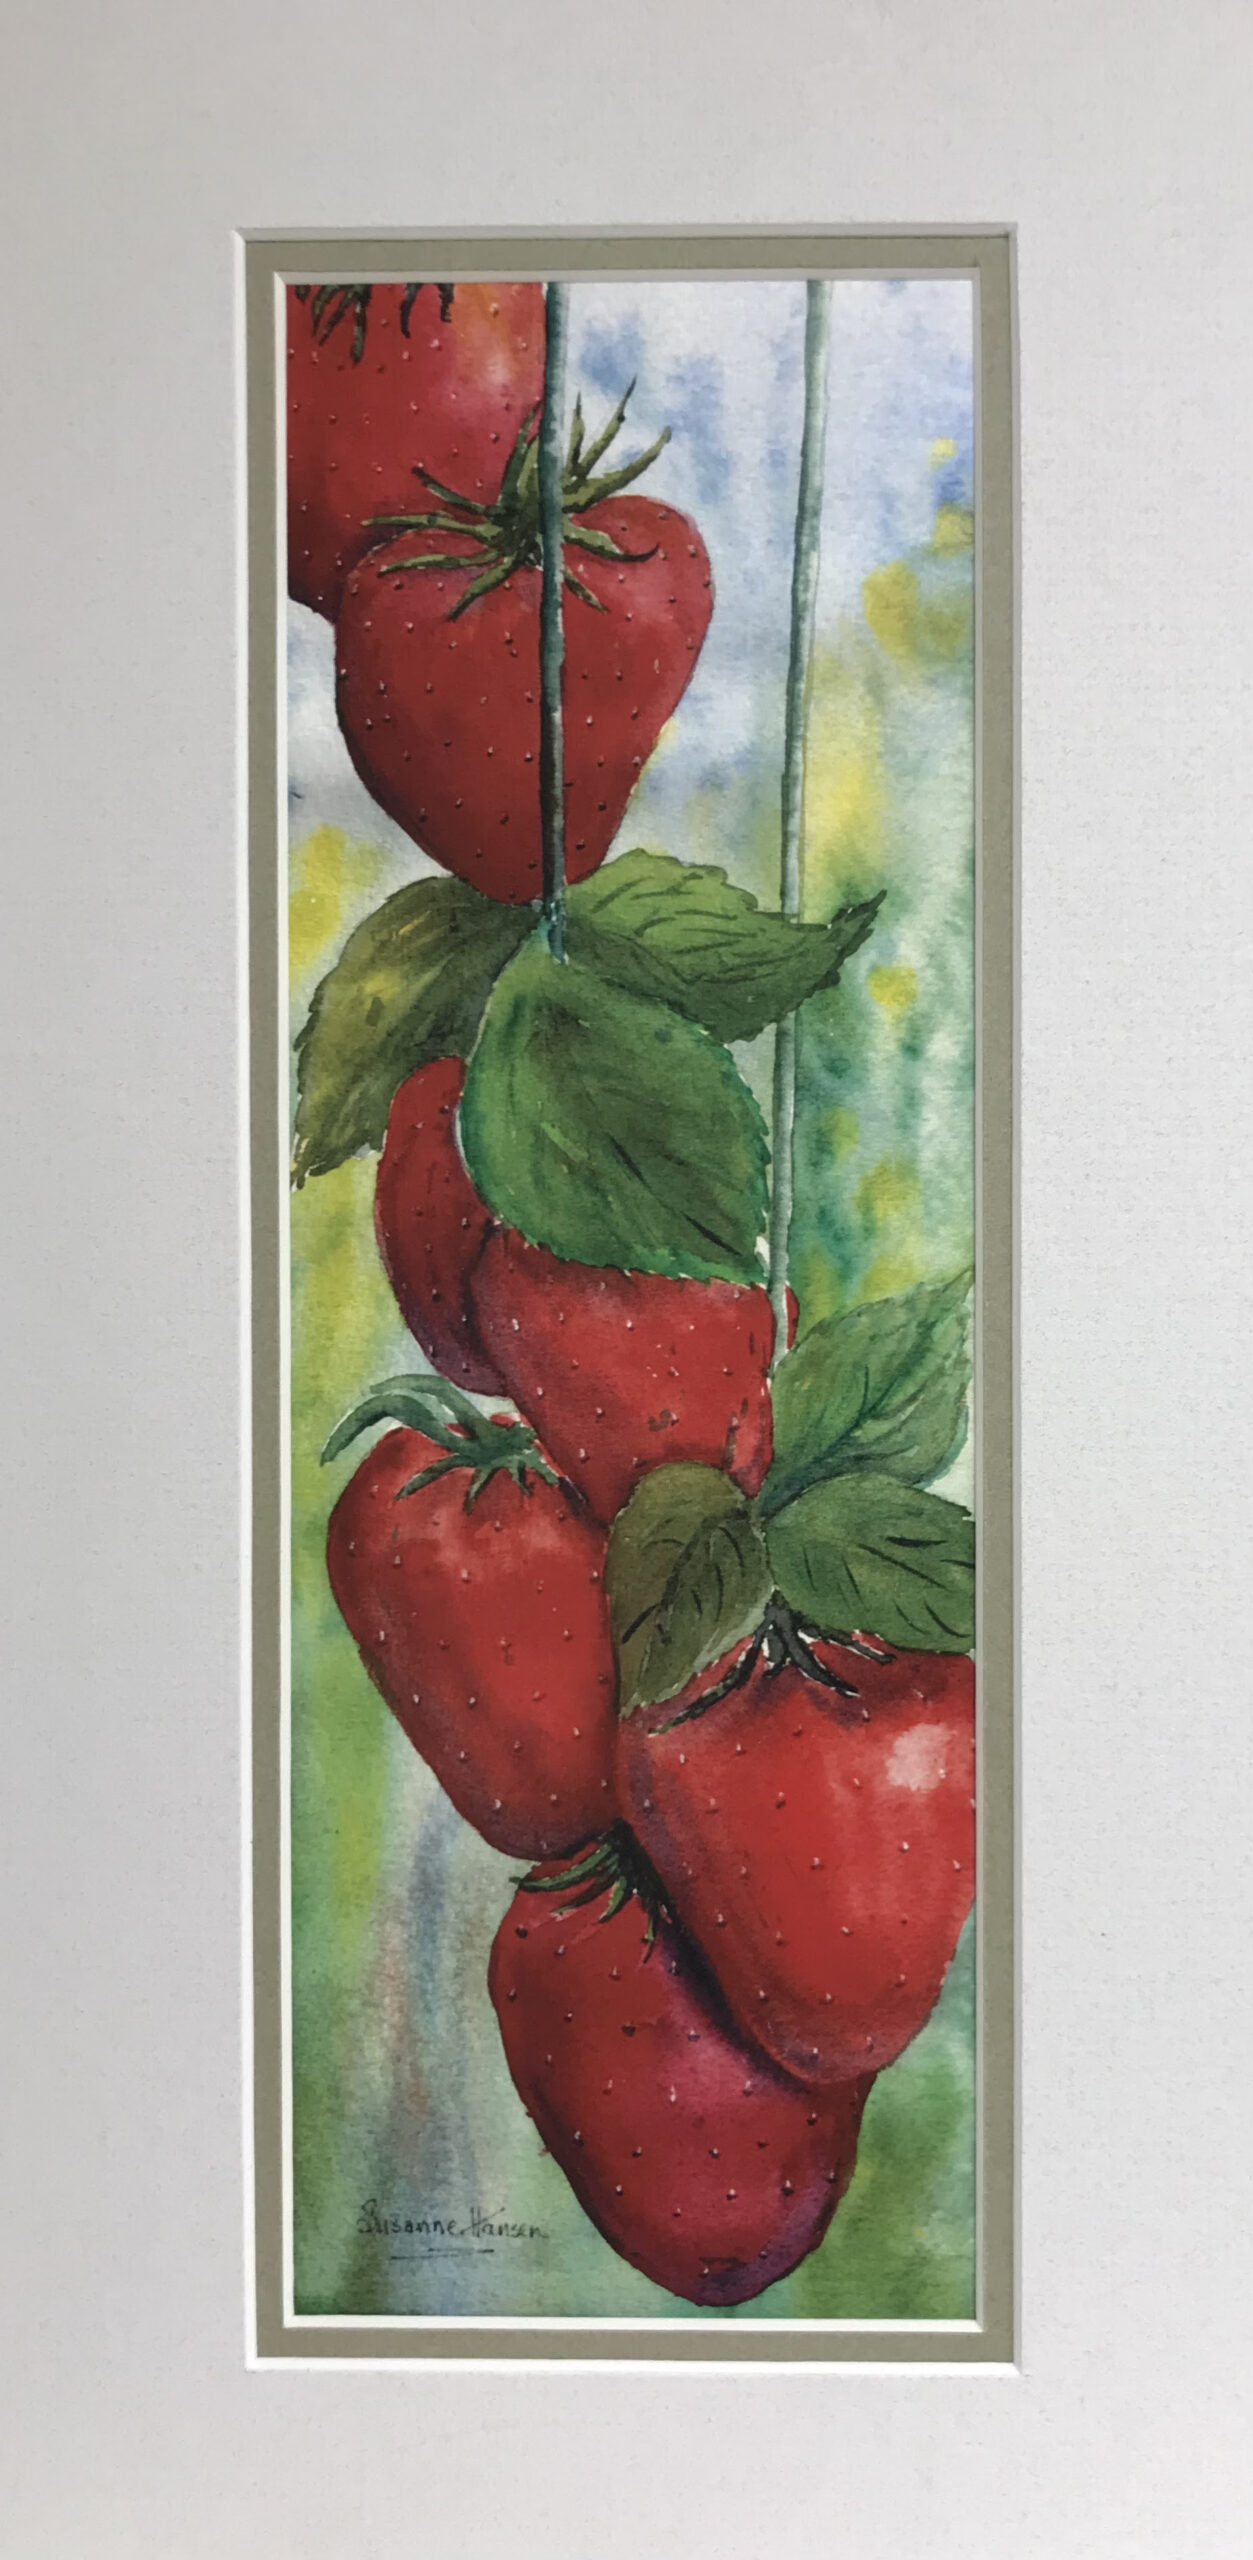 Painting of strawberries